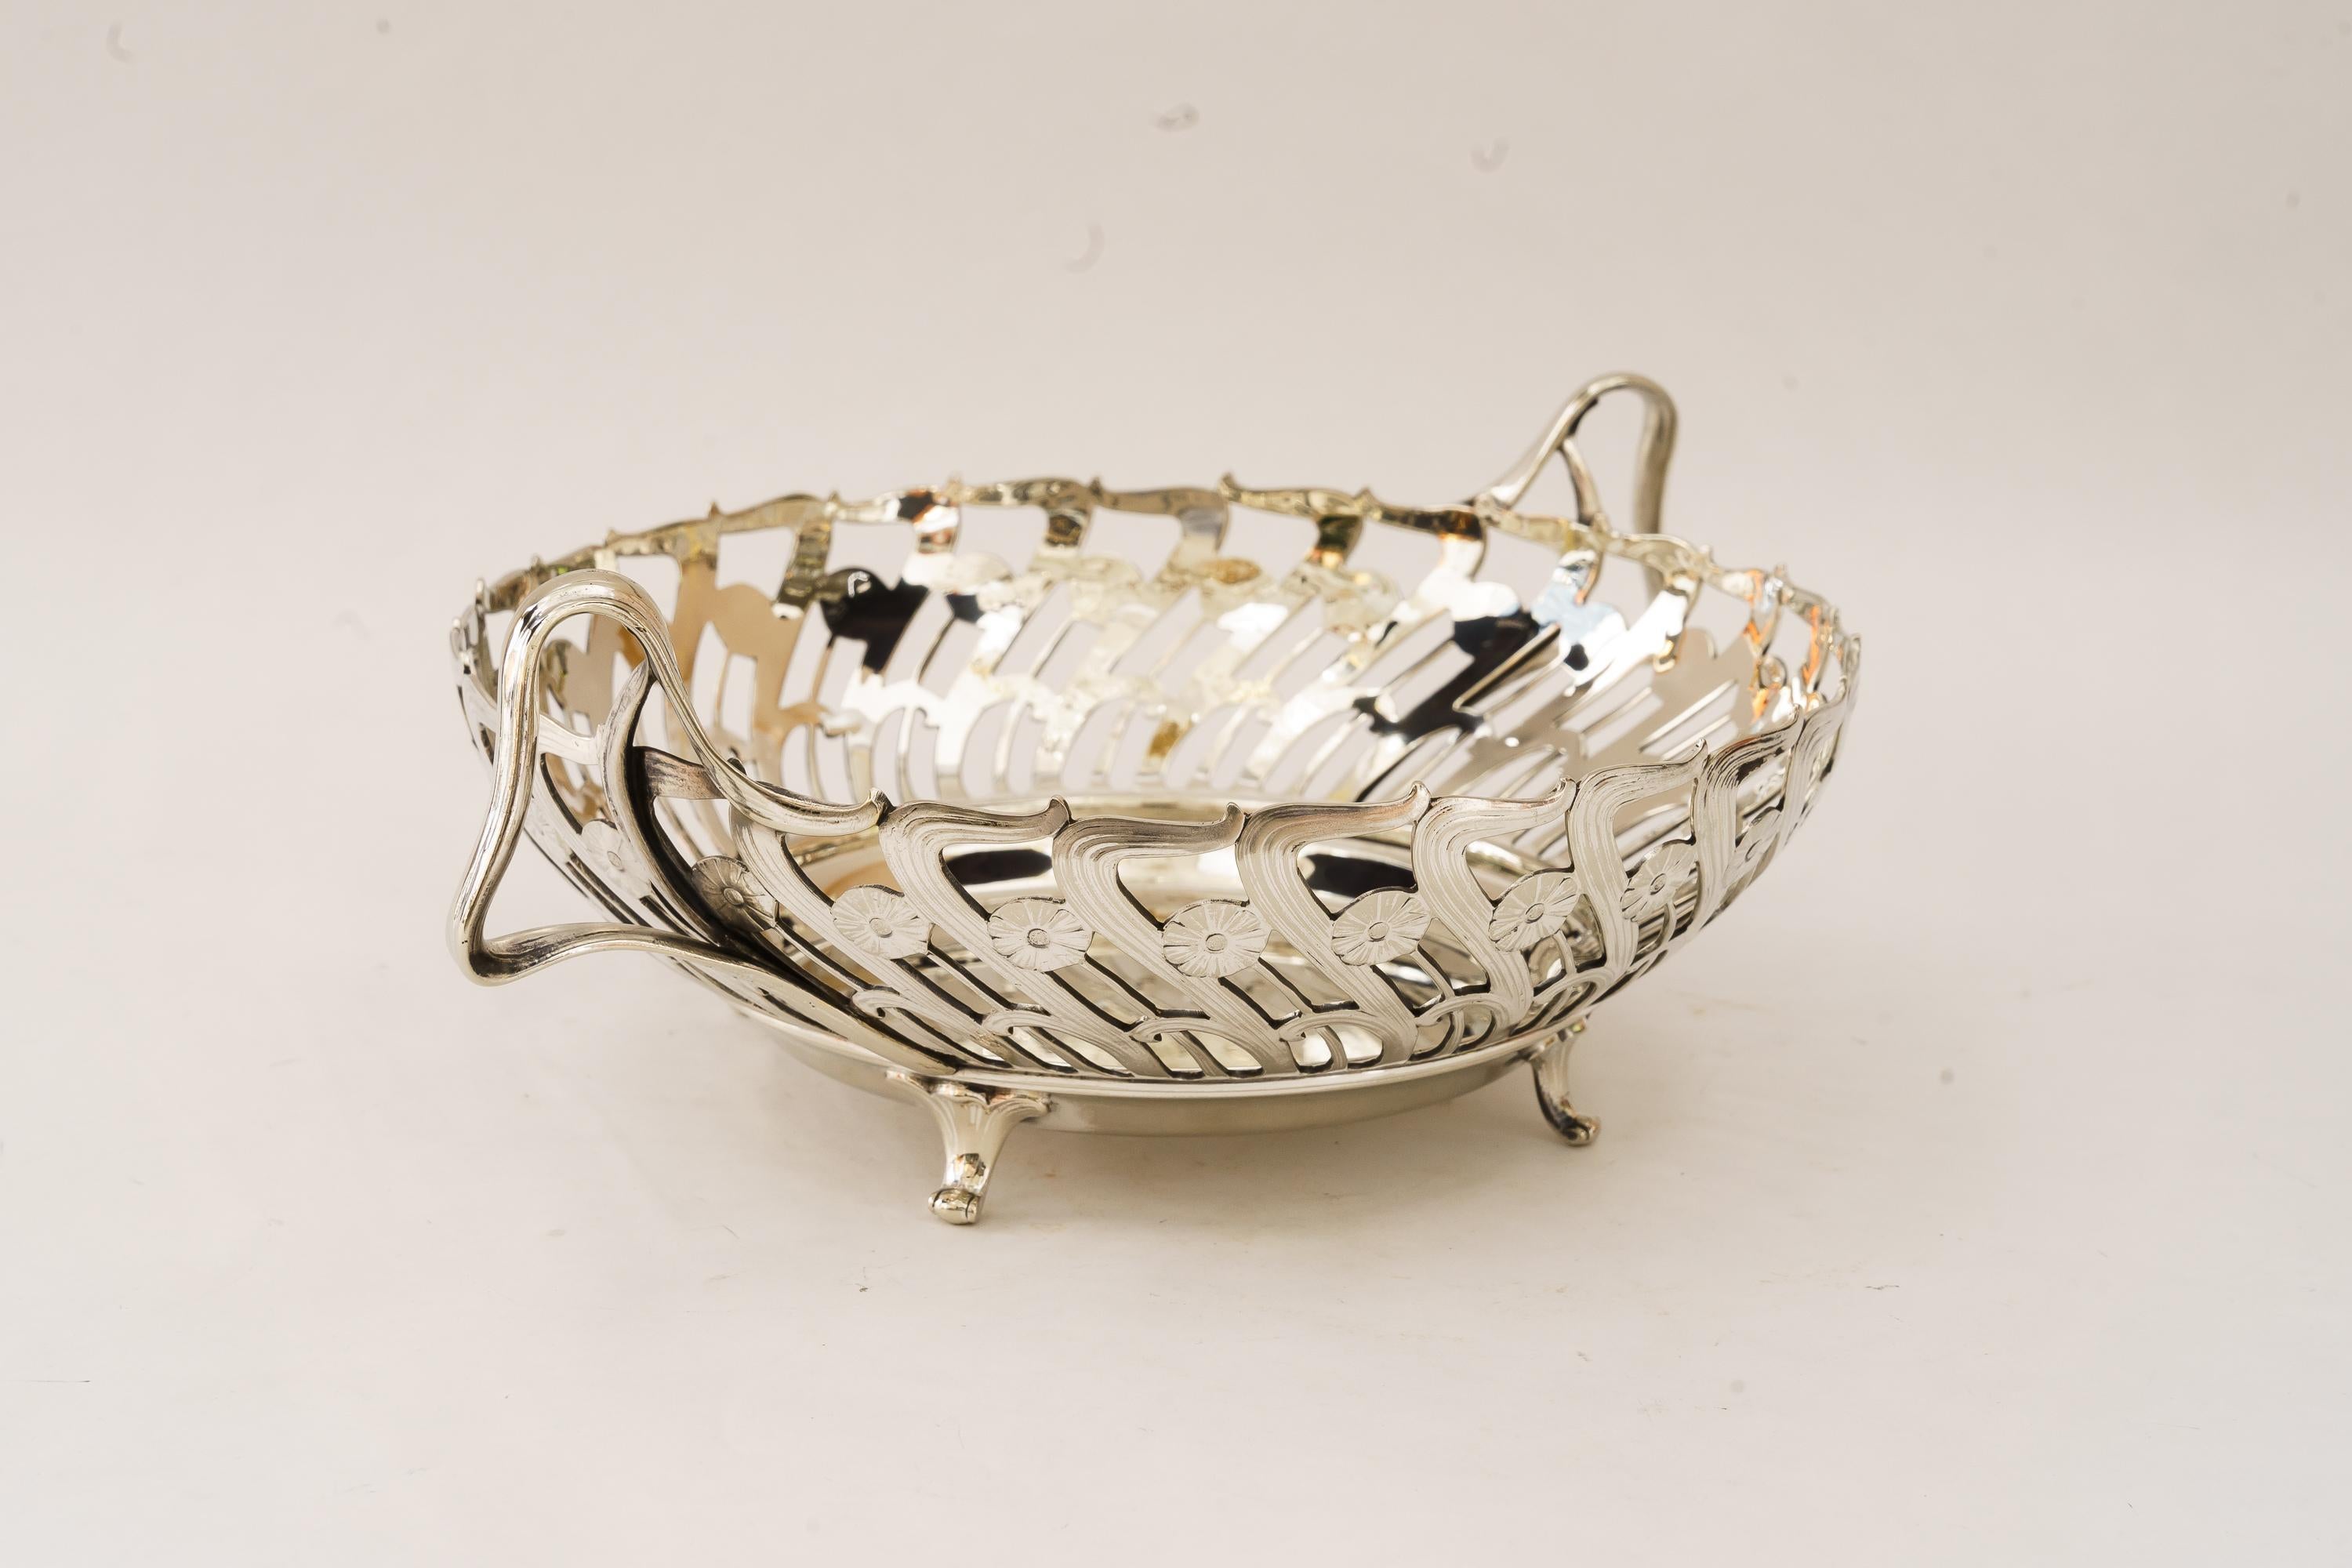 Decorative art deco fruit bowl vienna around 1920s
Polished and stove enameled
